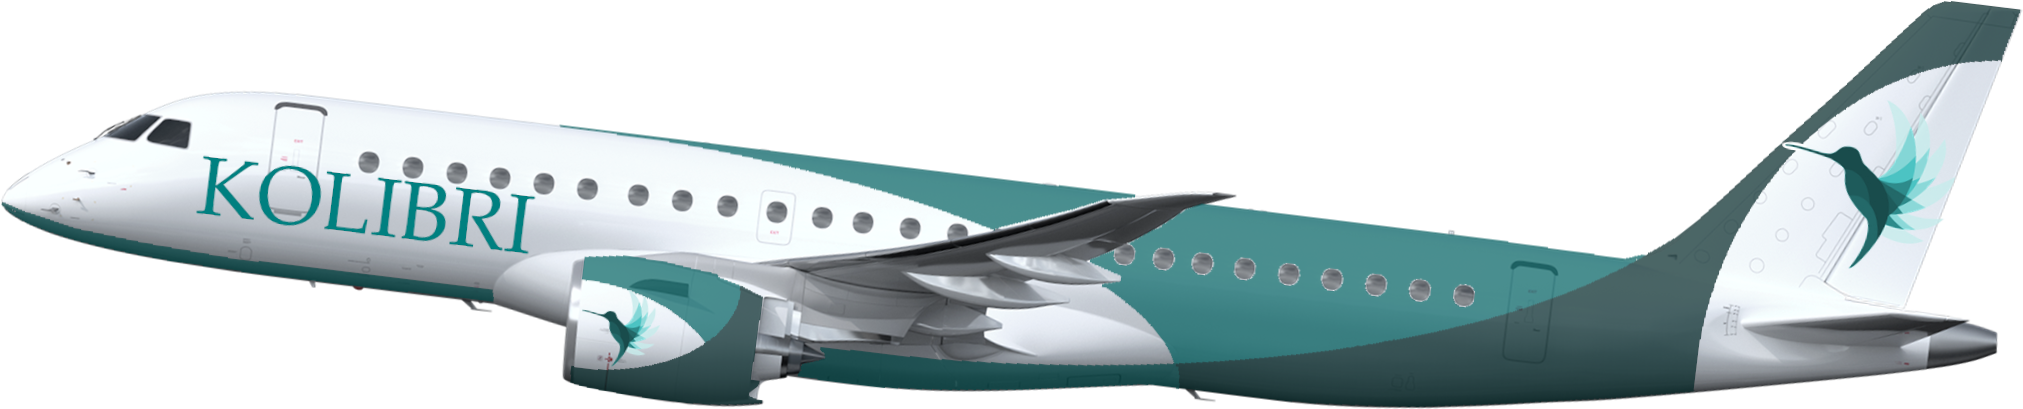 Kolibri-airplane image with livery